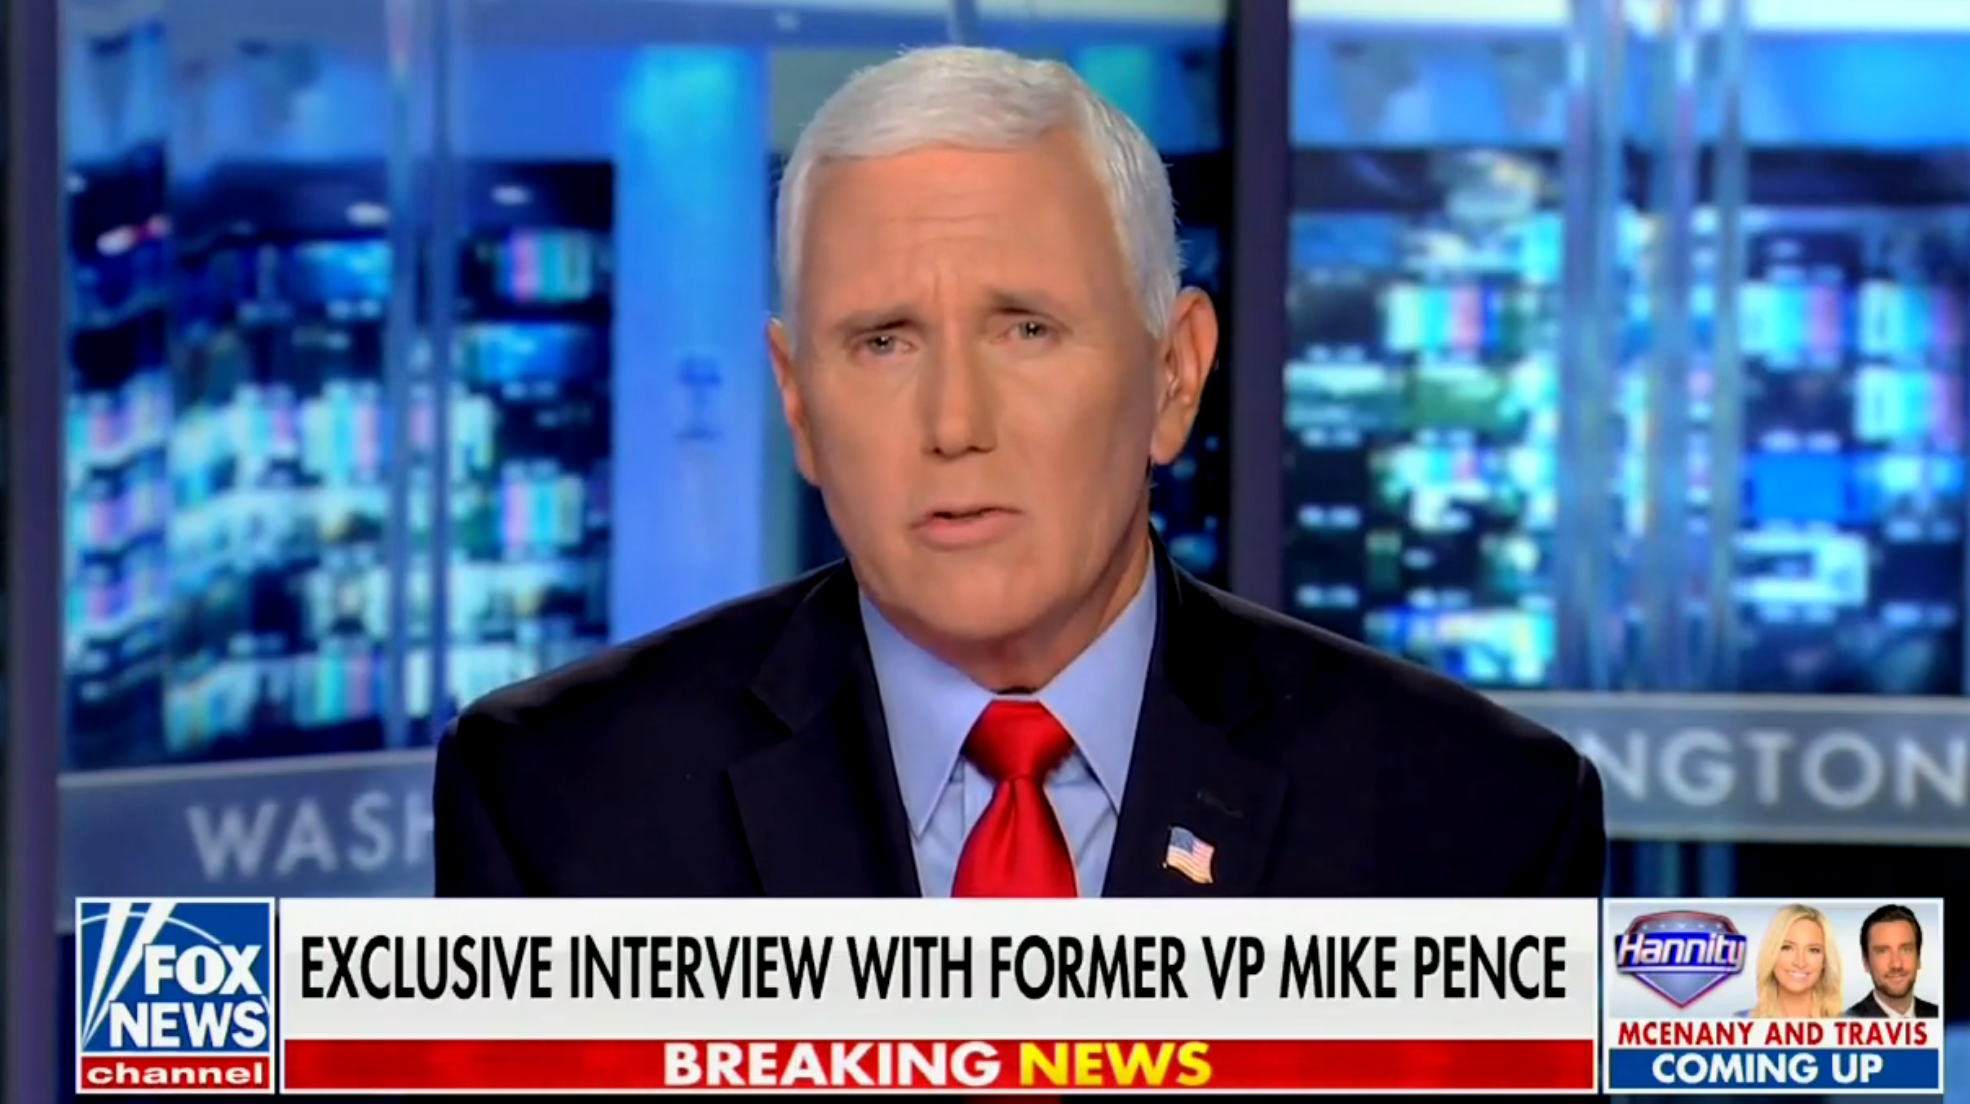 Mike Pence spoke with Fox News